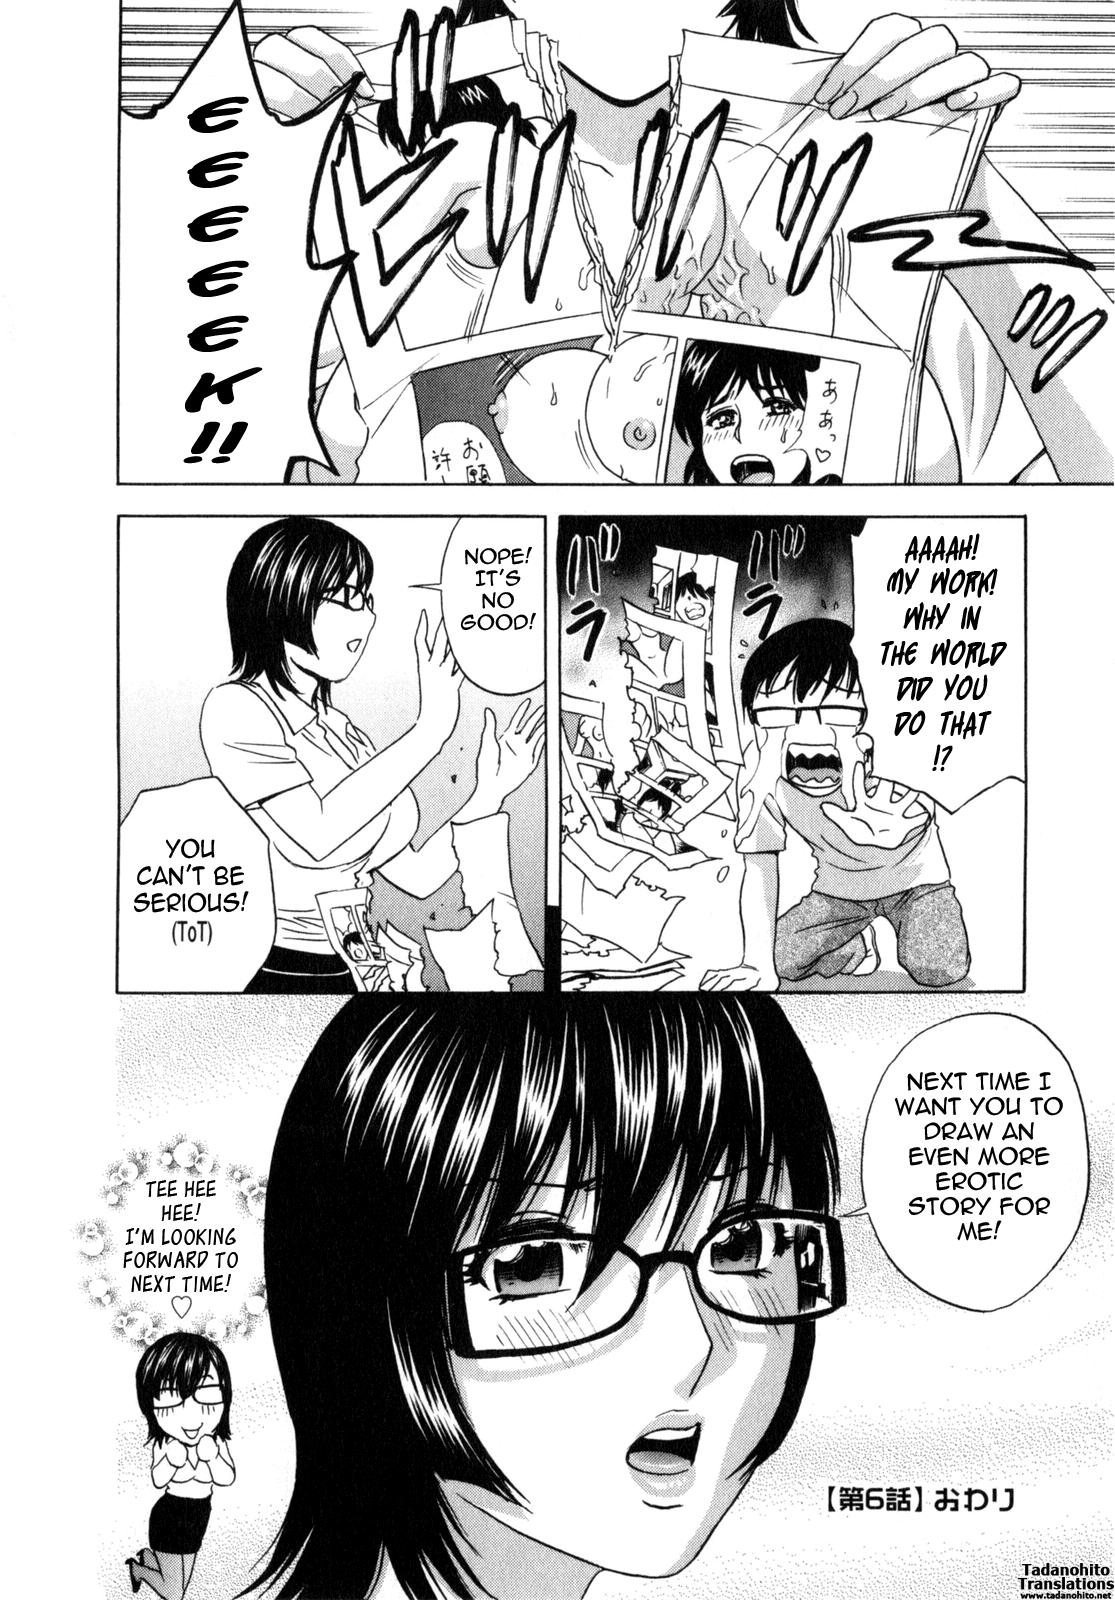 [Hidemaru] Life with Married Women Just Like a Manga 1 - Ch. 1-9 [English] {Tadanohito} 121